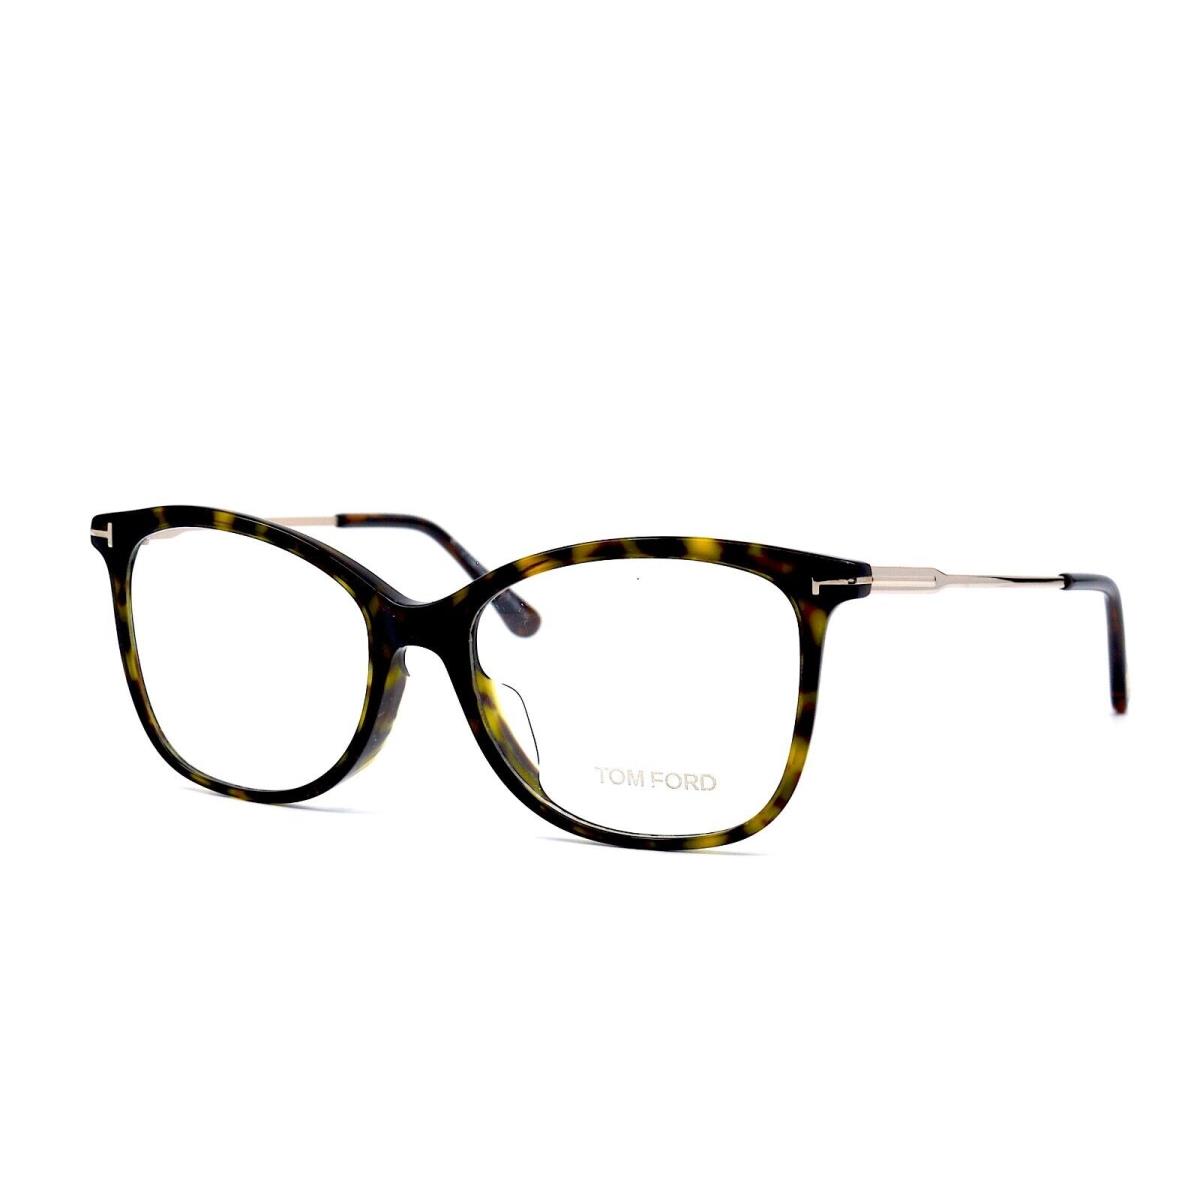 Tom Ford TF5510-F 052 Havana/gold Eyeglasses Frame 54-17-145